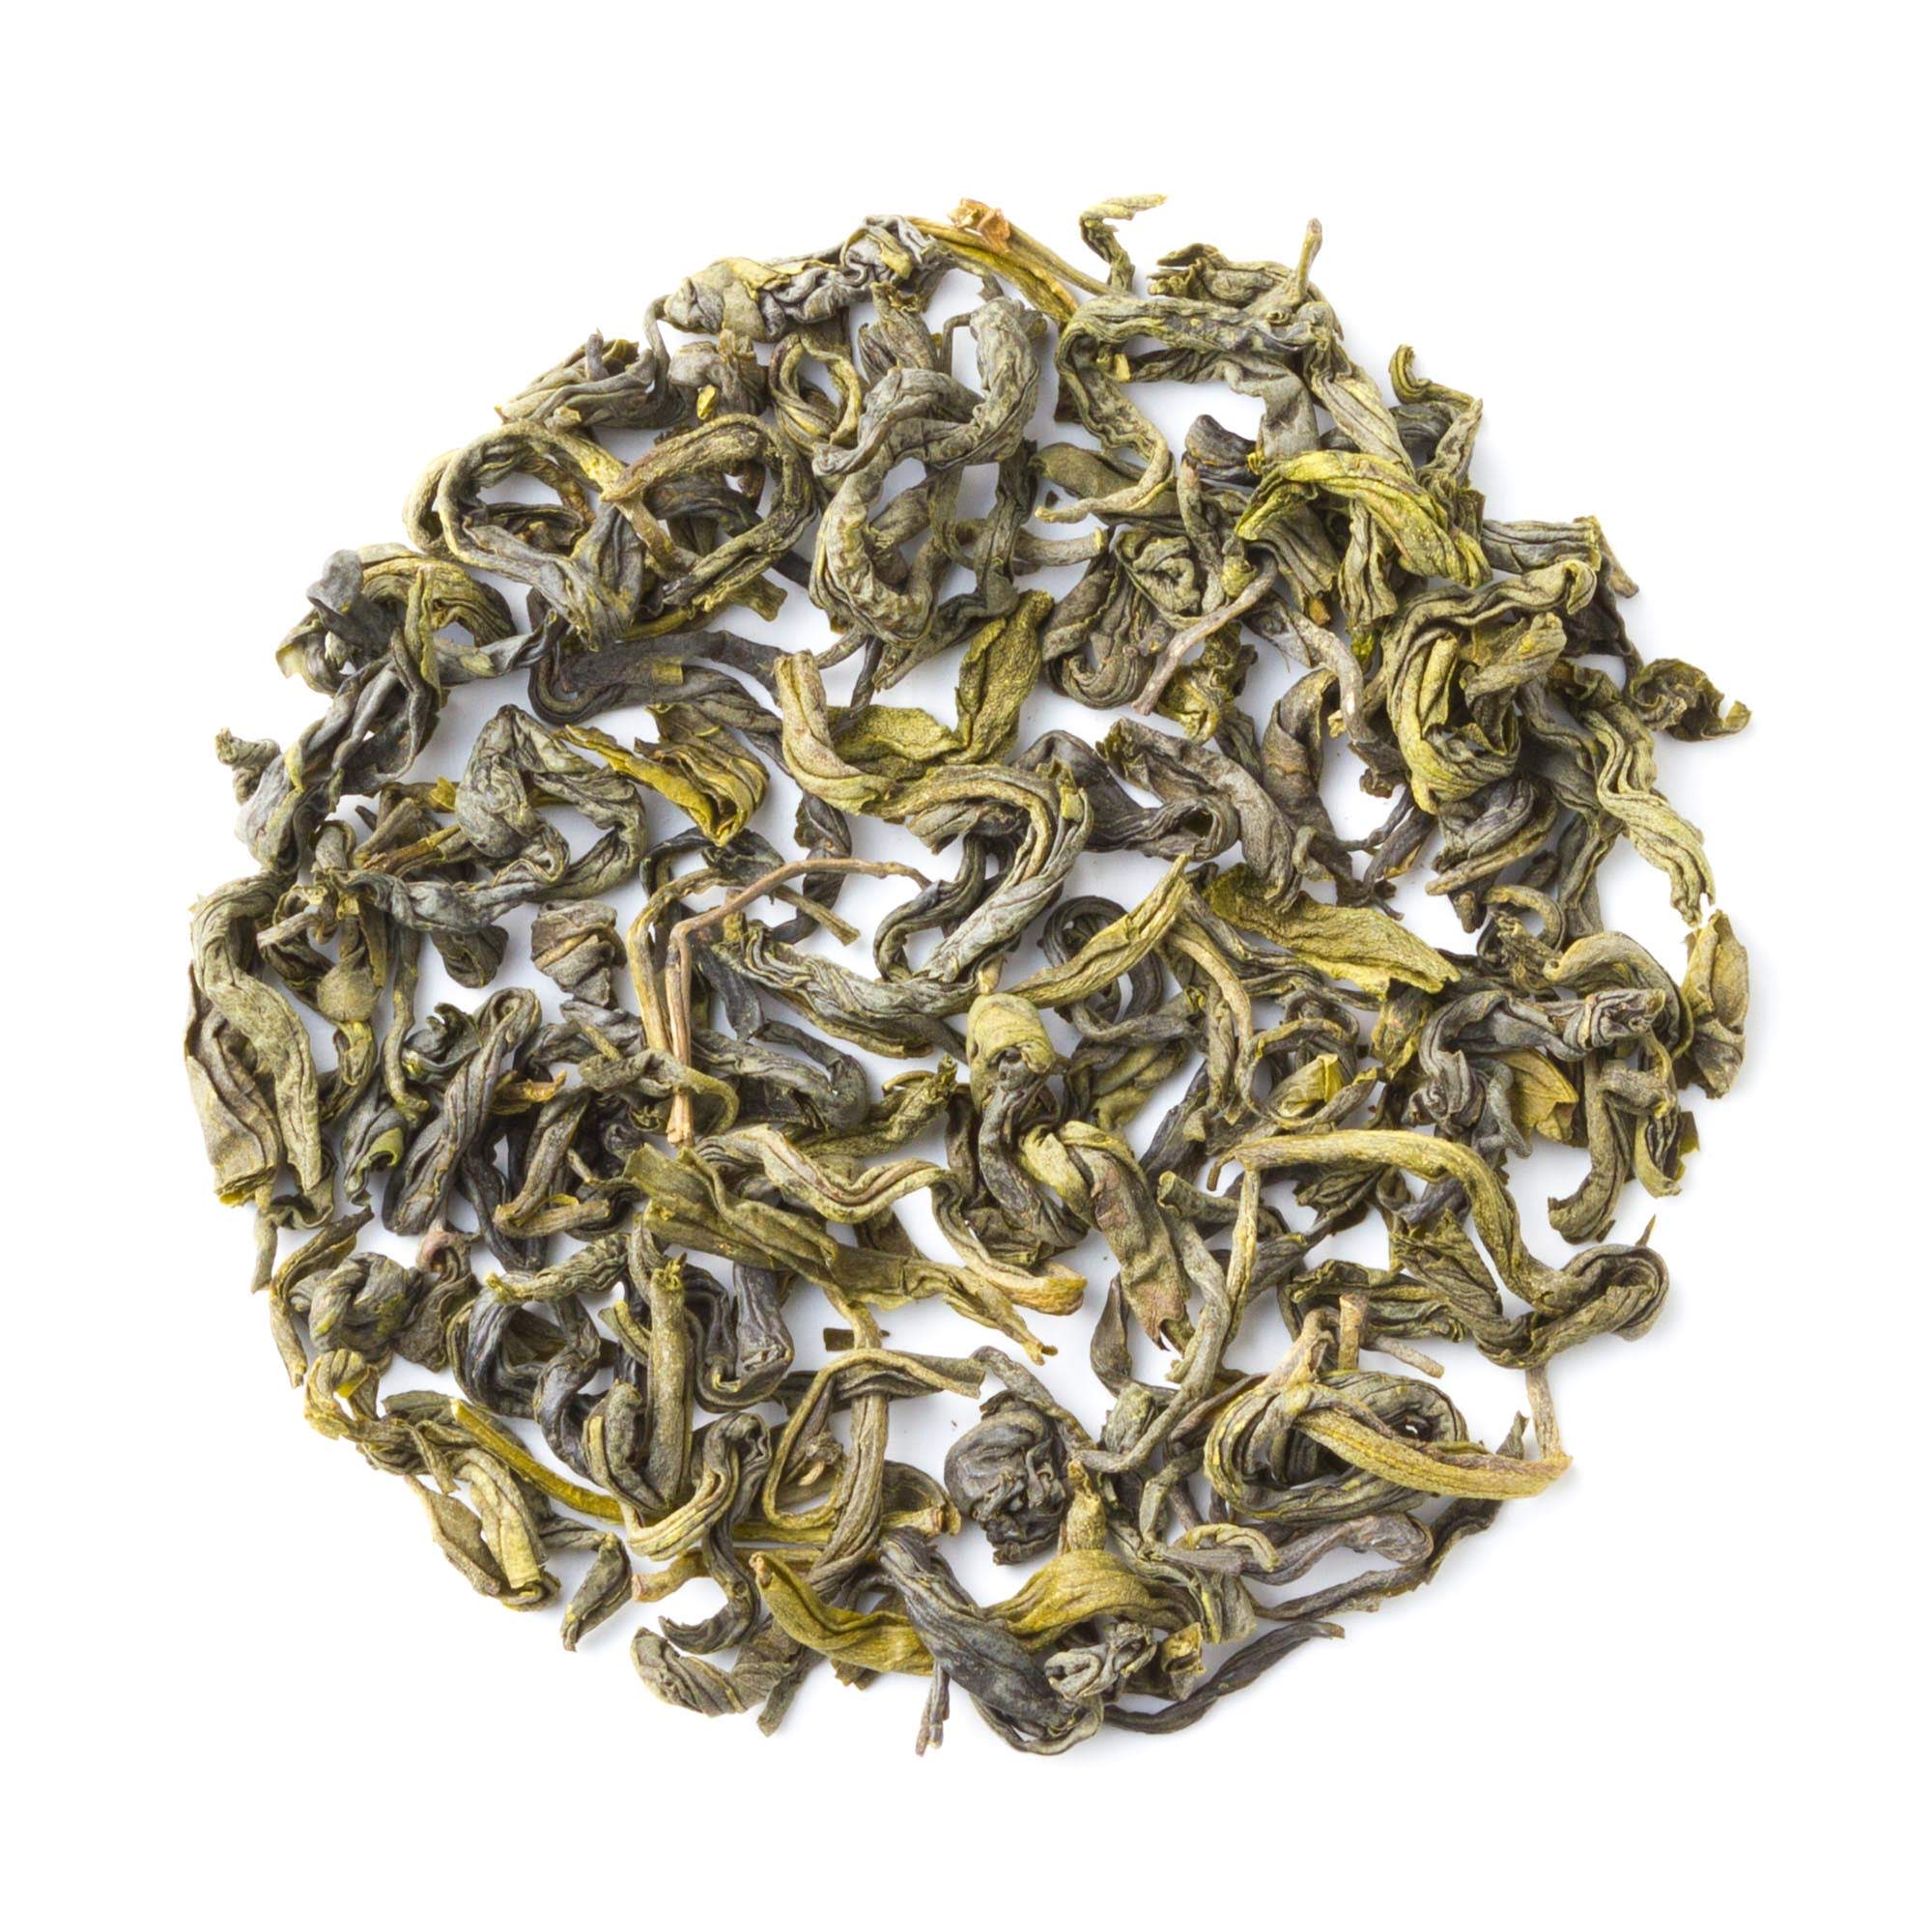 Organic Just Green - Bulk Loose Leaf Green Tea | Heavenly Tea Leaves